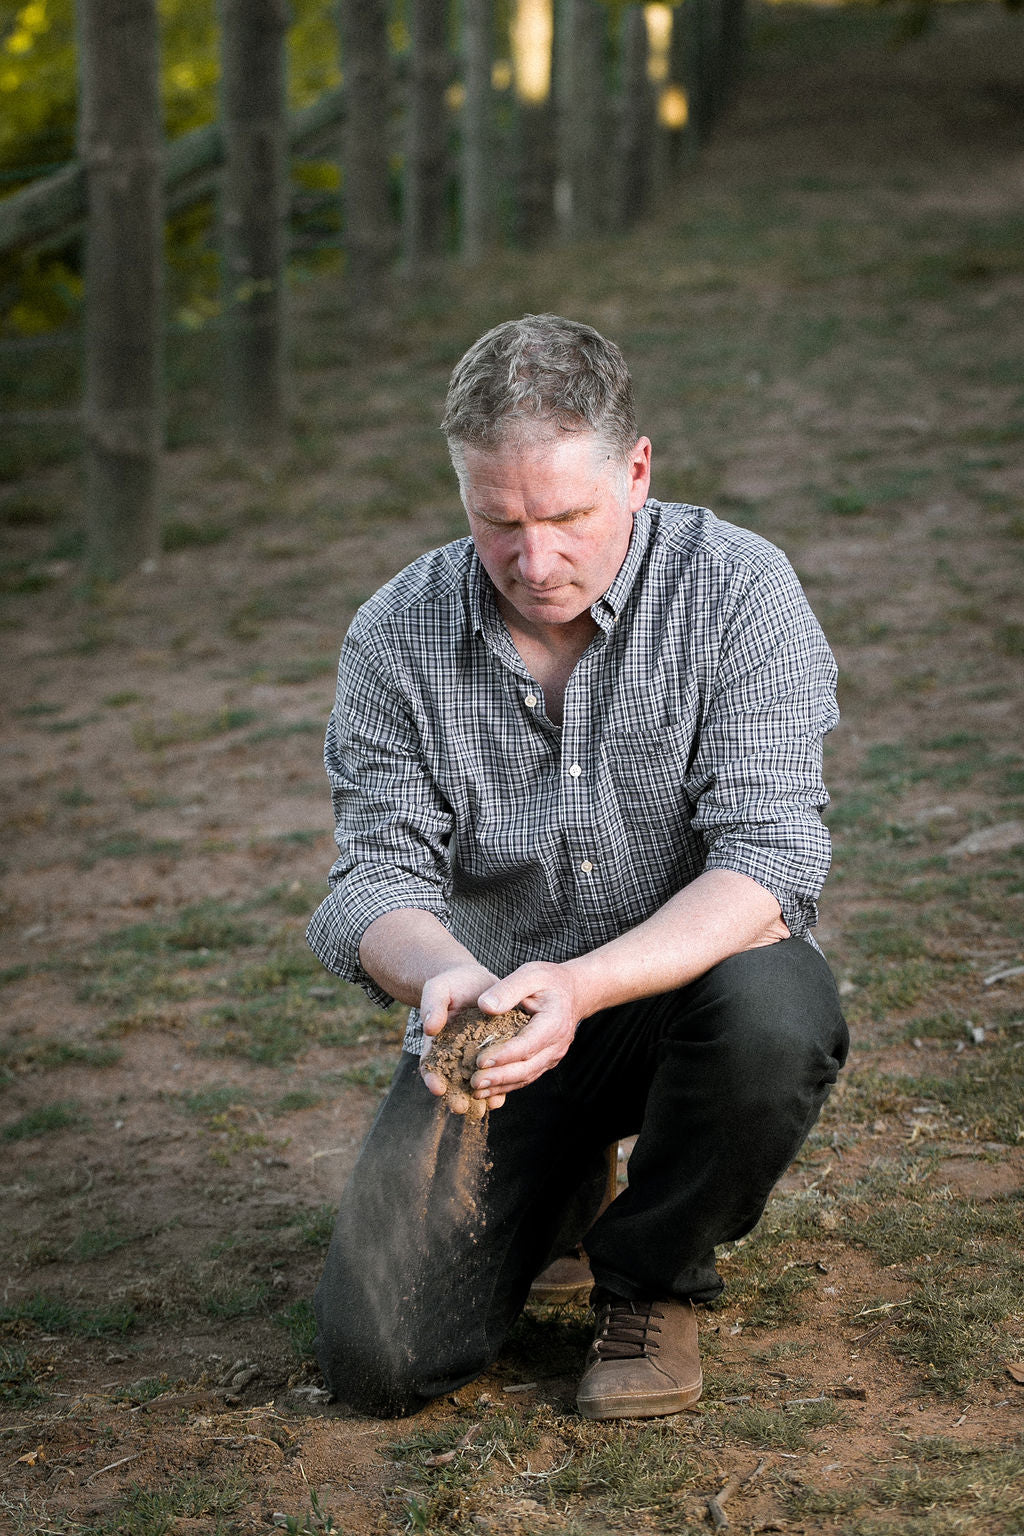 Winemaker Alex McKay examines the soil in the vineyard.